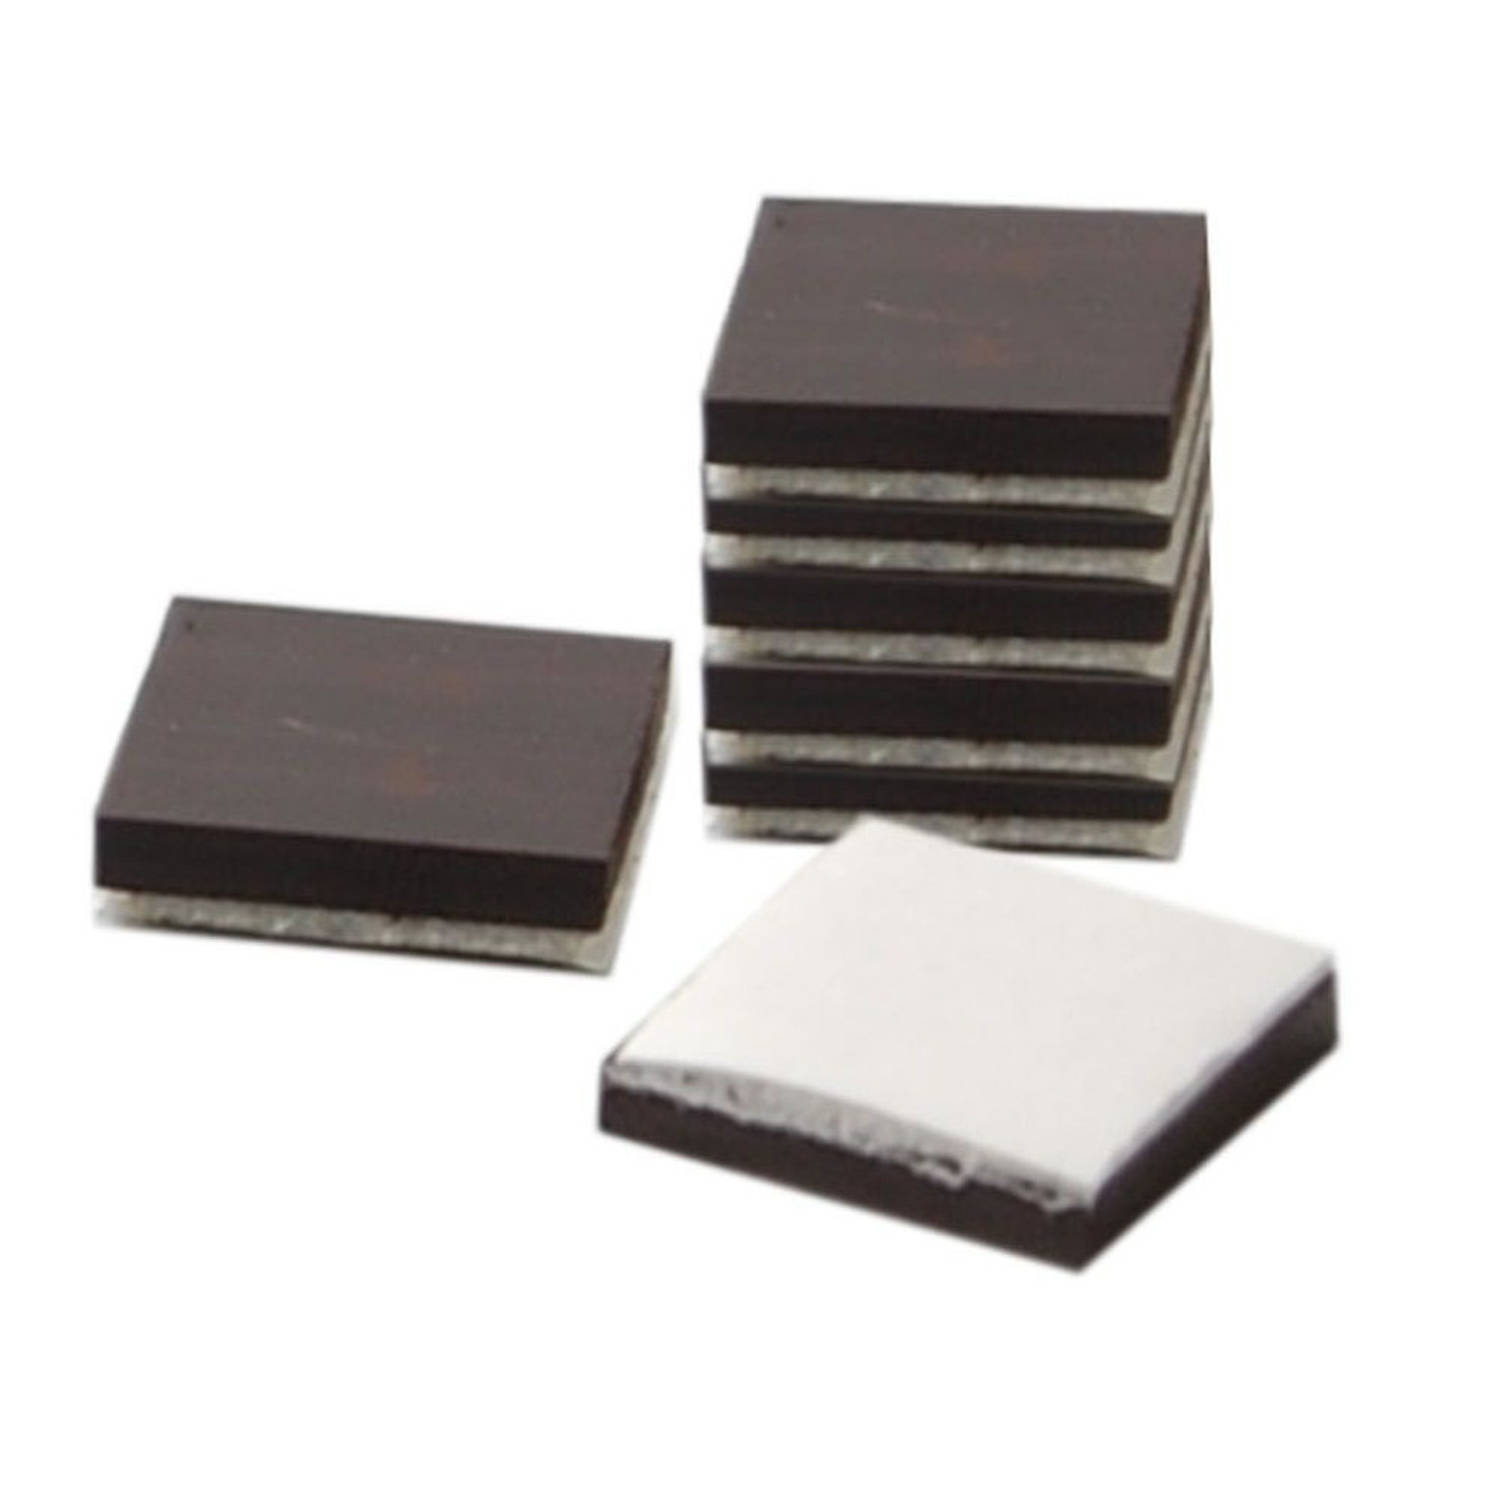 12x Vierkante koelkast/whiteboard magneten met 2 x 2 cm - Magneten | Blokker